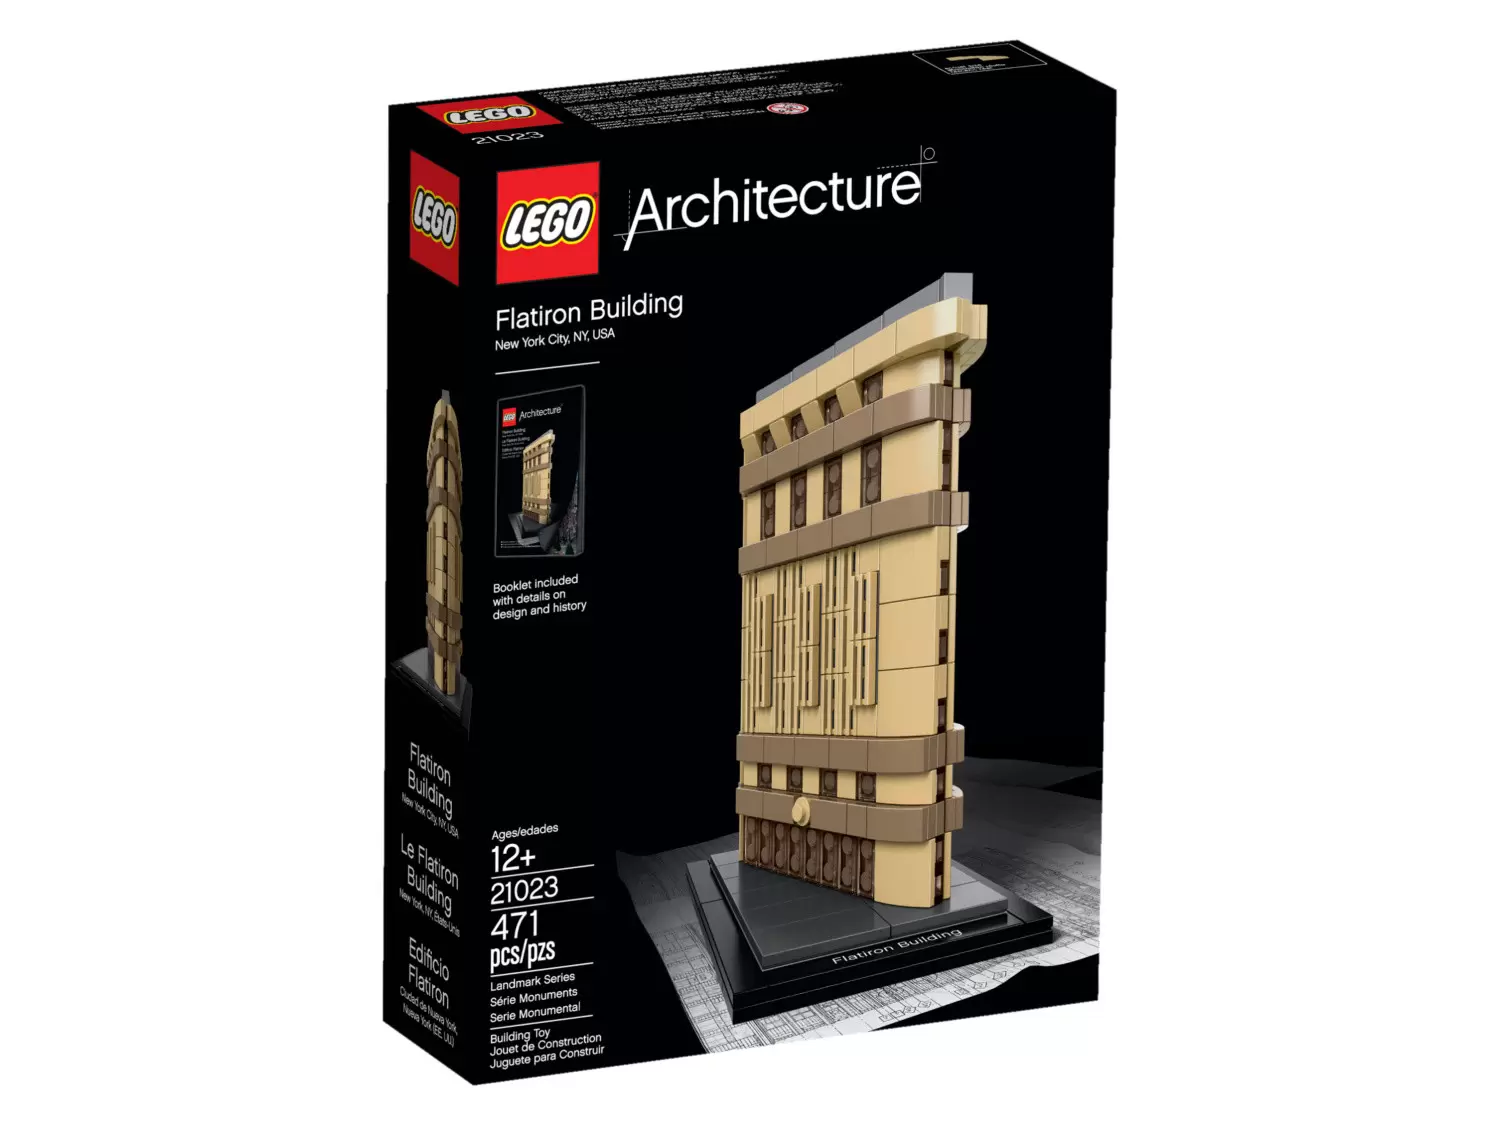 LEGO Architecture - Flatiron Building, New York